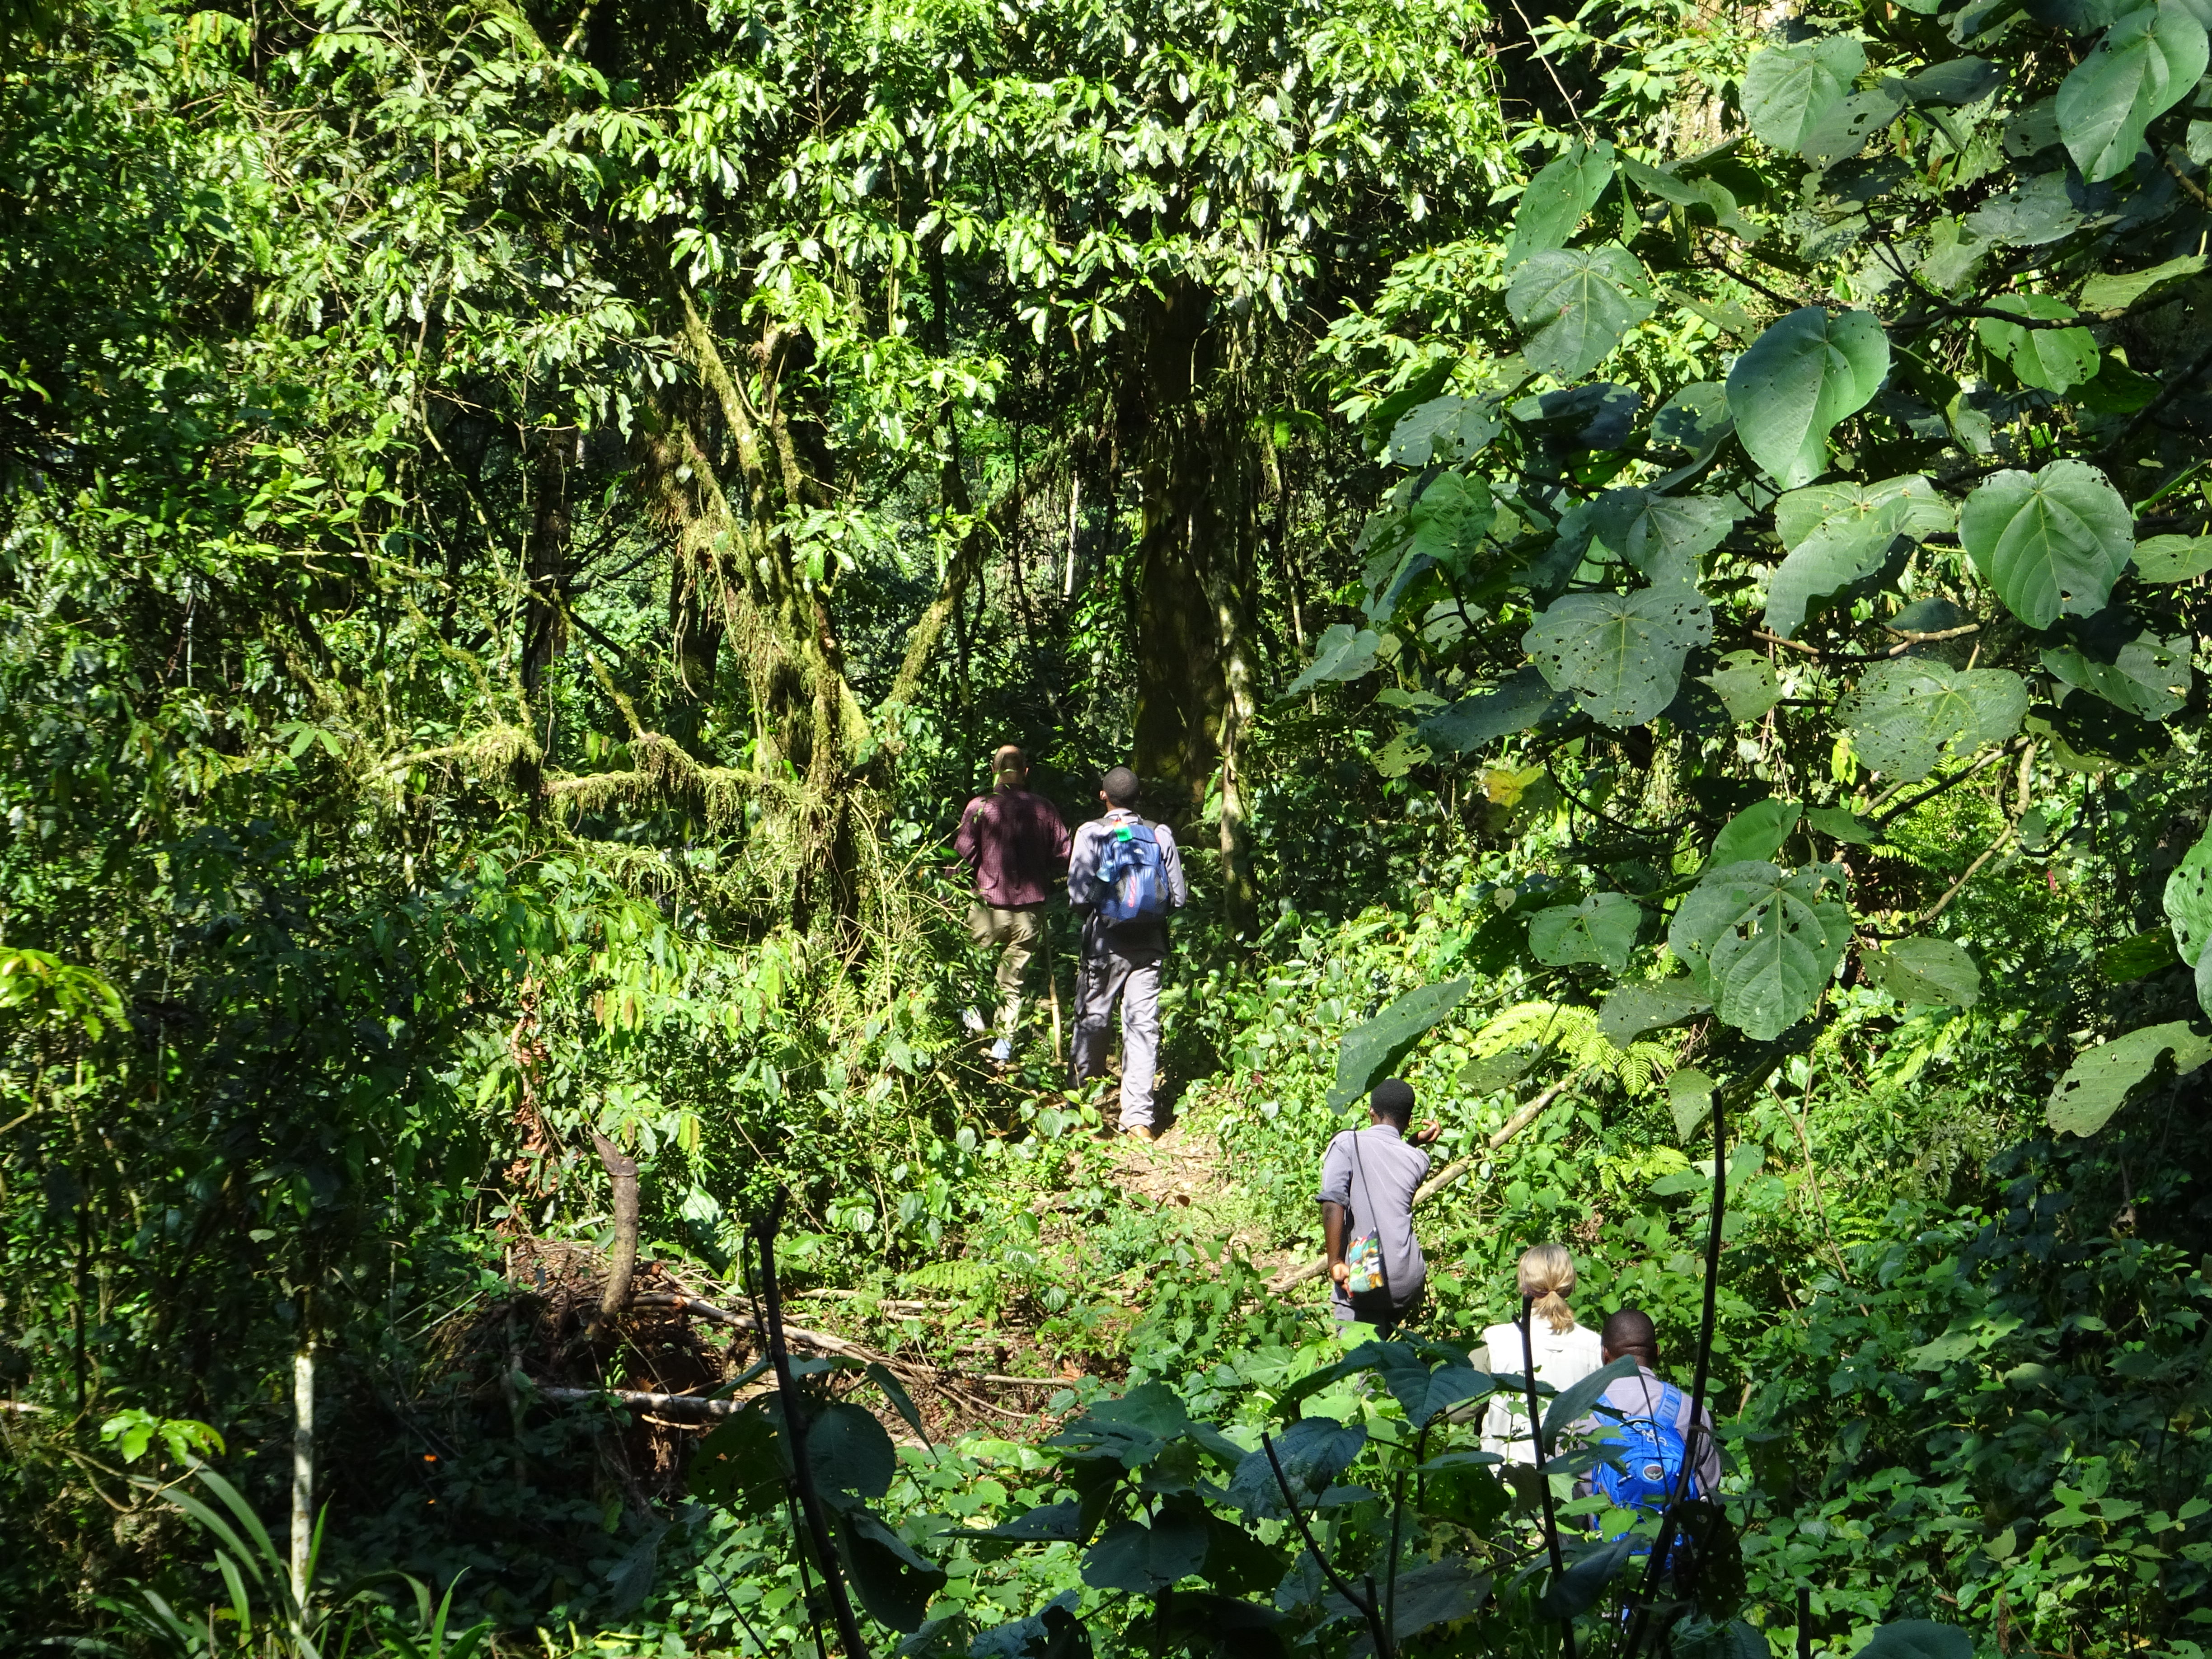 trekking through jungle